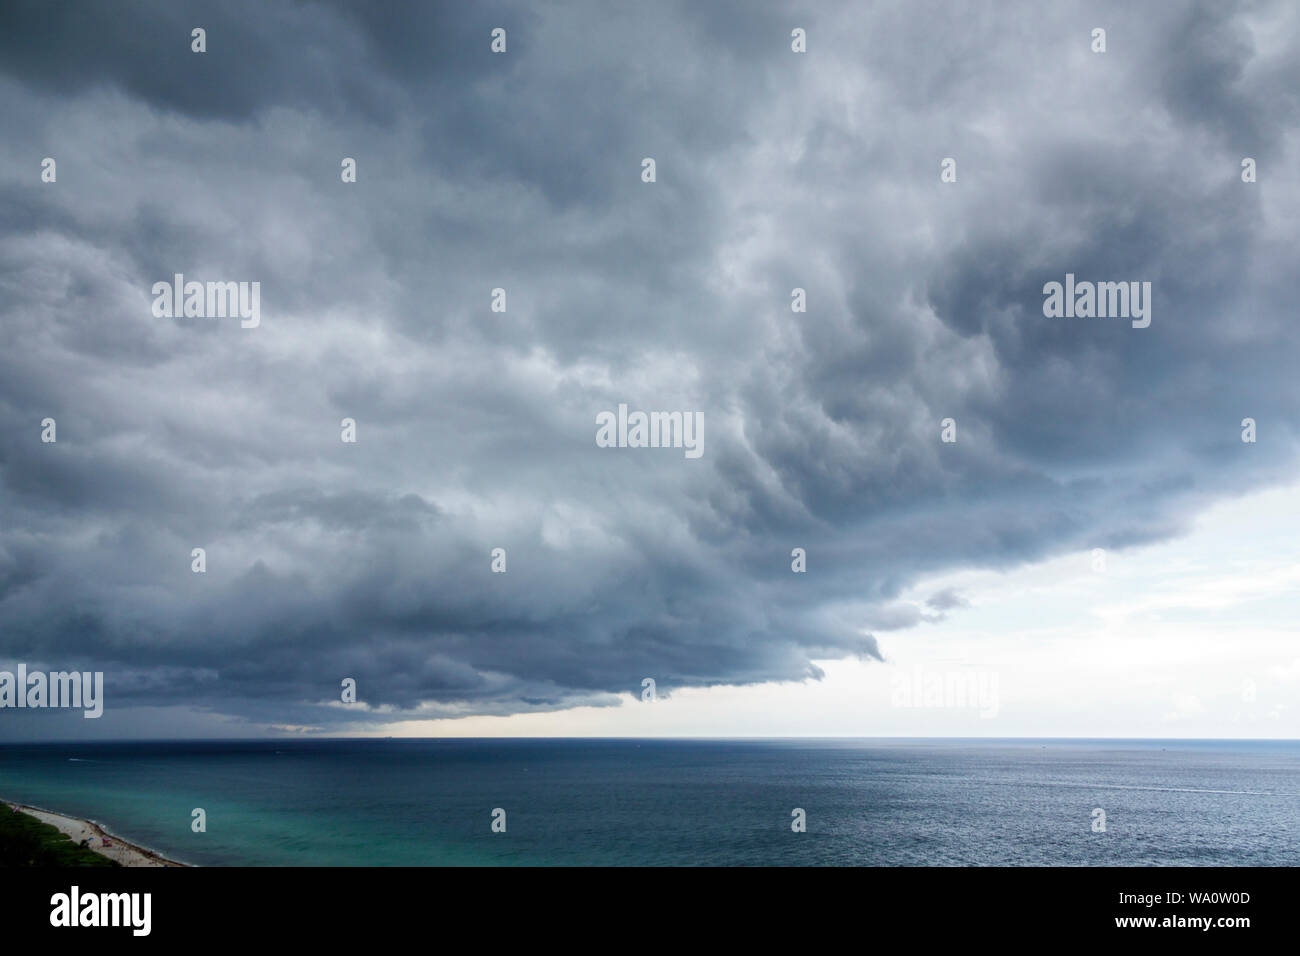 Miami Beach Florida,North Beach,weather sky clouds storm clouds storm rain,stormfront gathering,FL190731052 Stock Photo